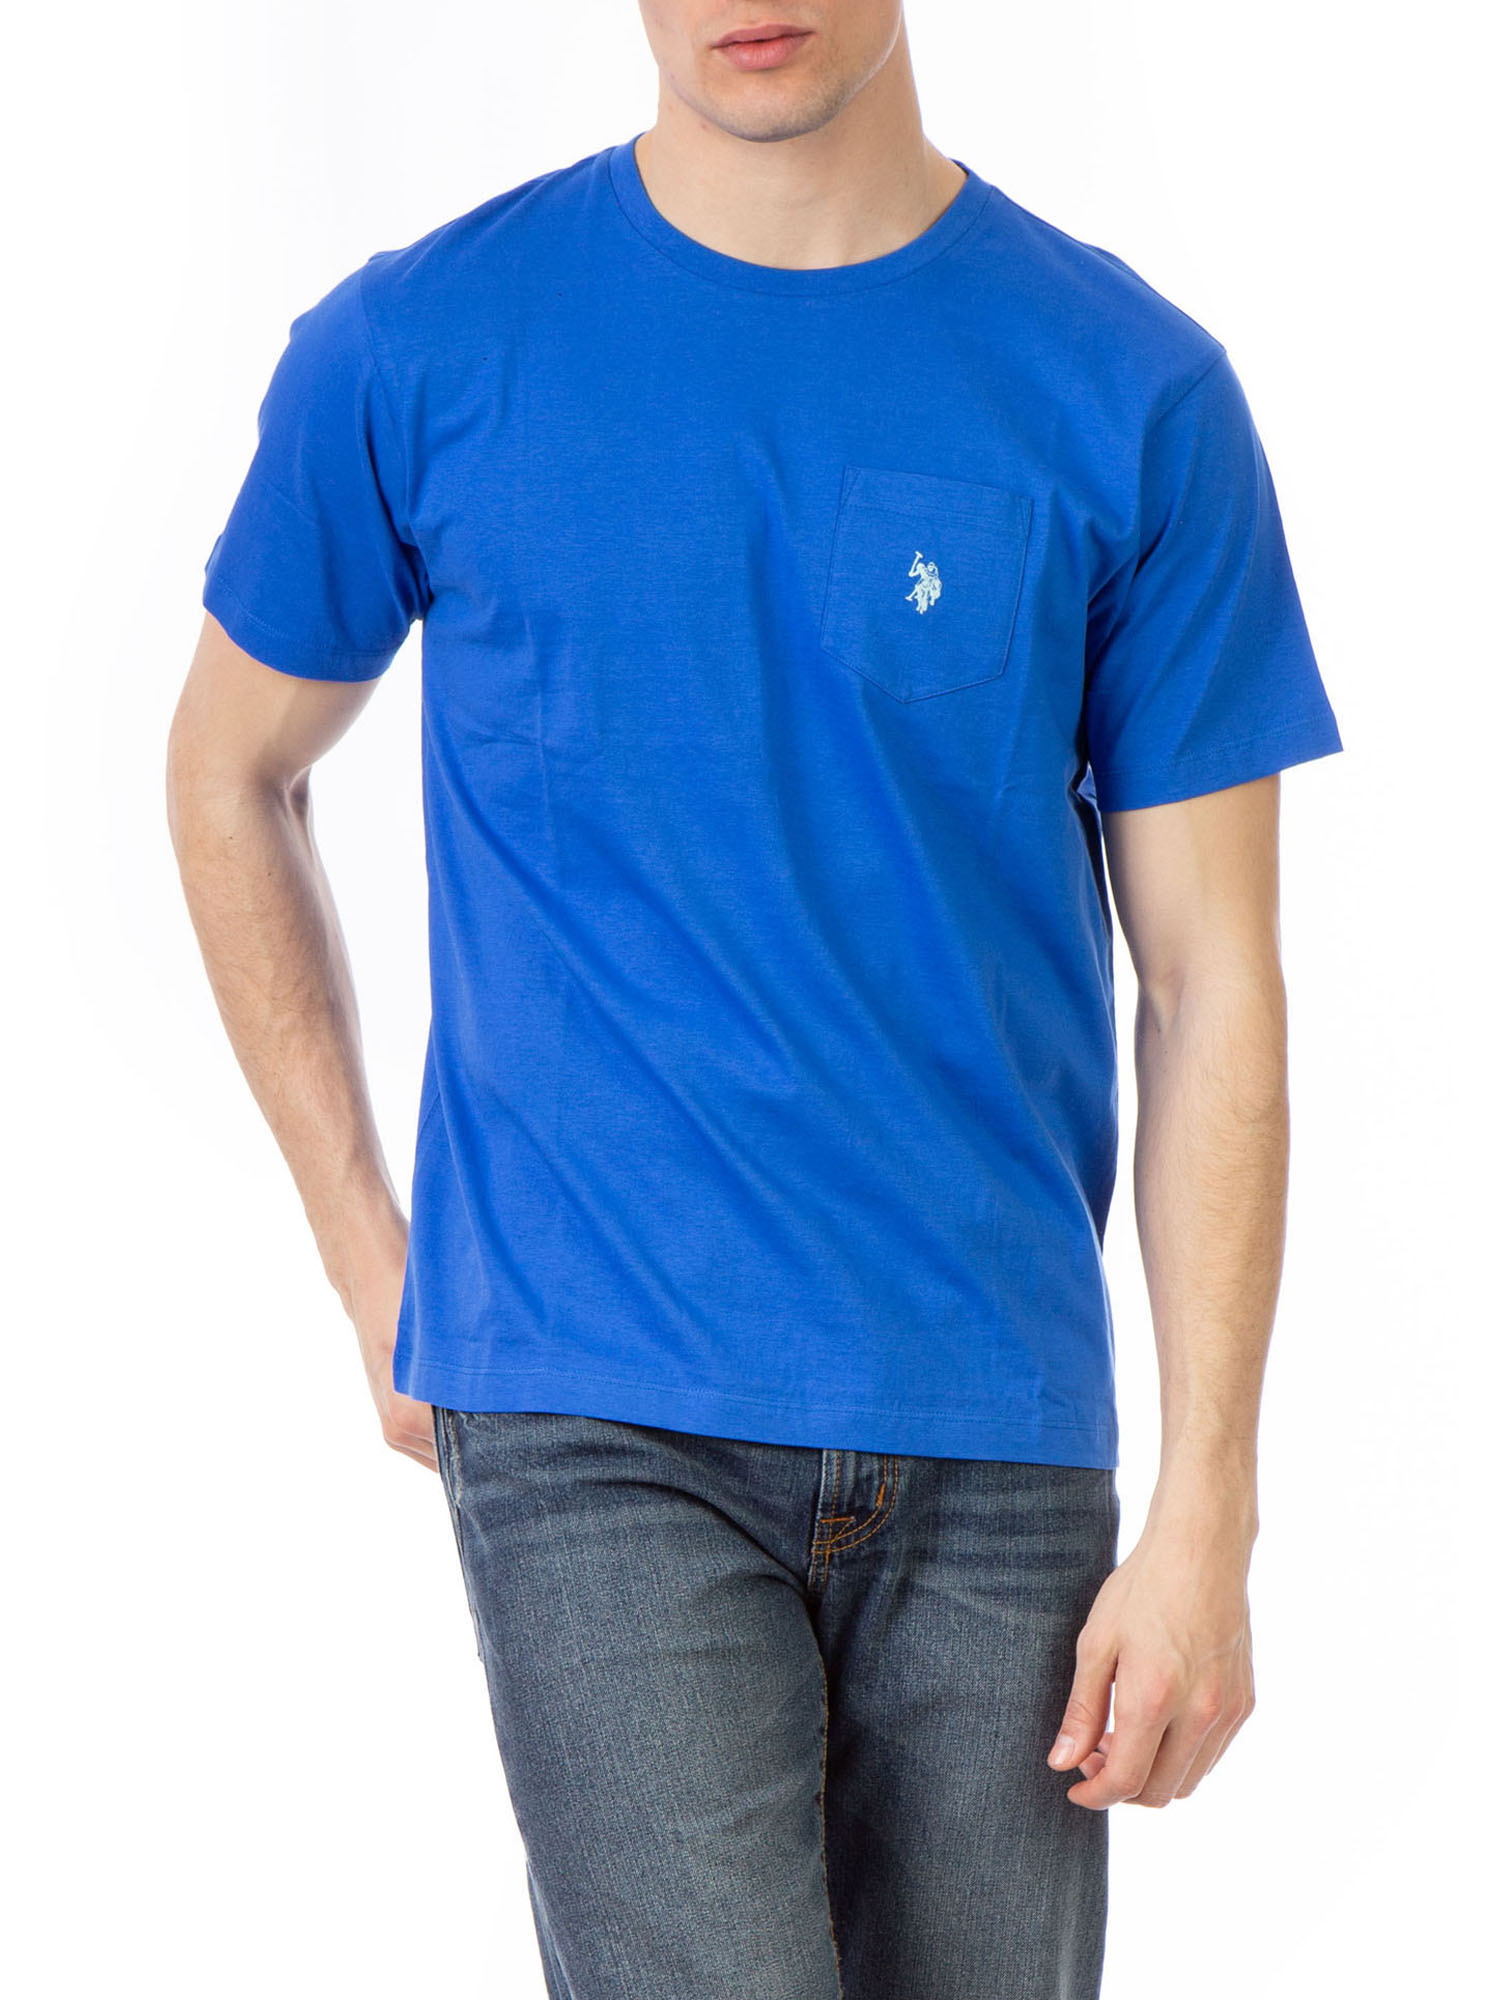 U.S. Polo Assn. Men's Pocket Knit T-Shirt - image 1 of 3